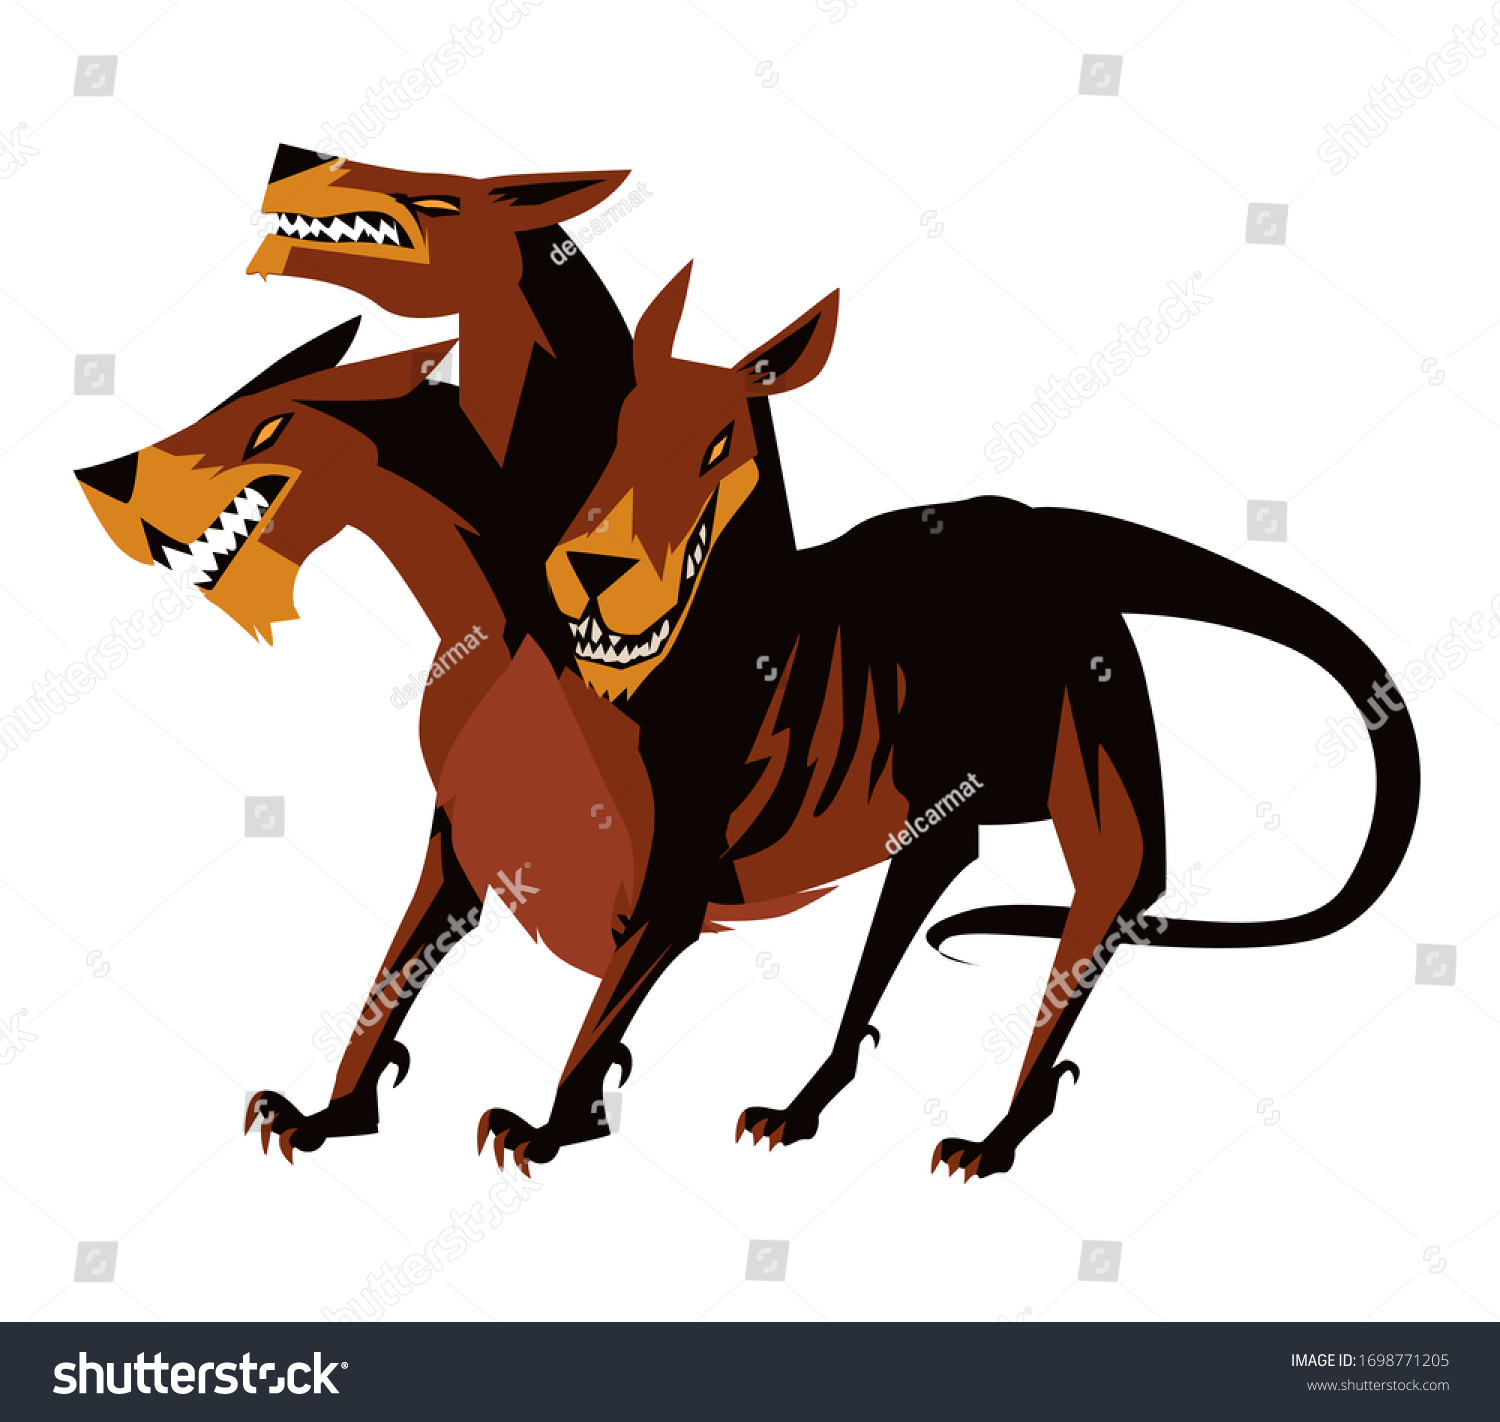 SVG of giant cerberus underworld mythology three heads dog svg